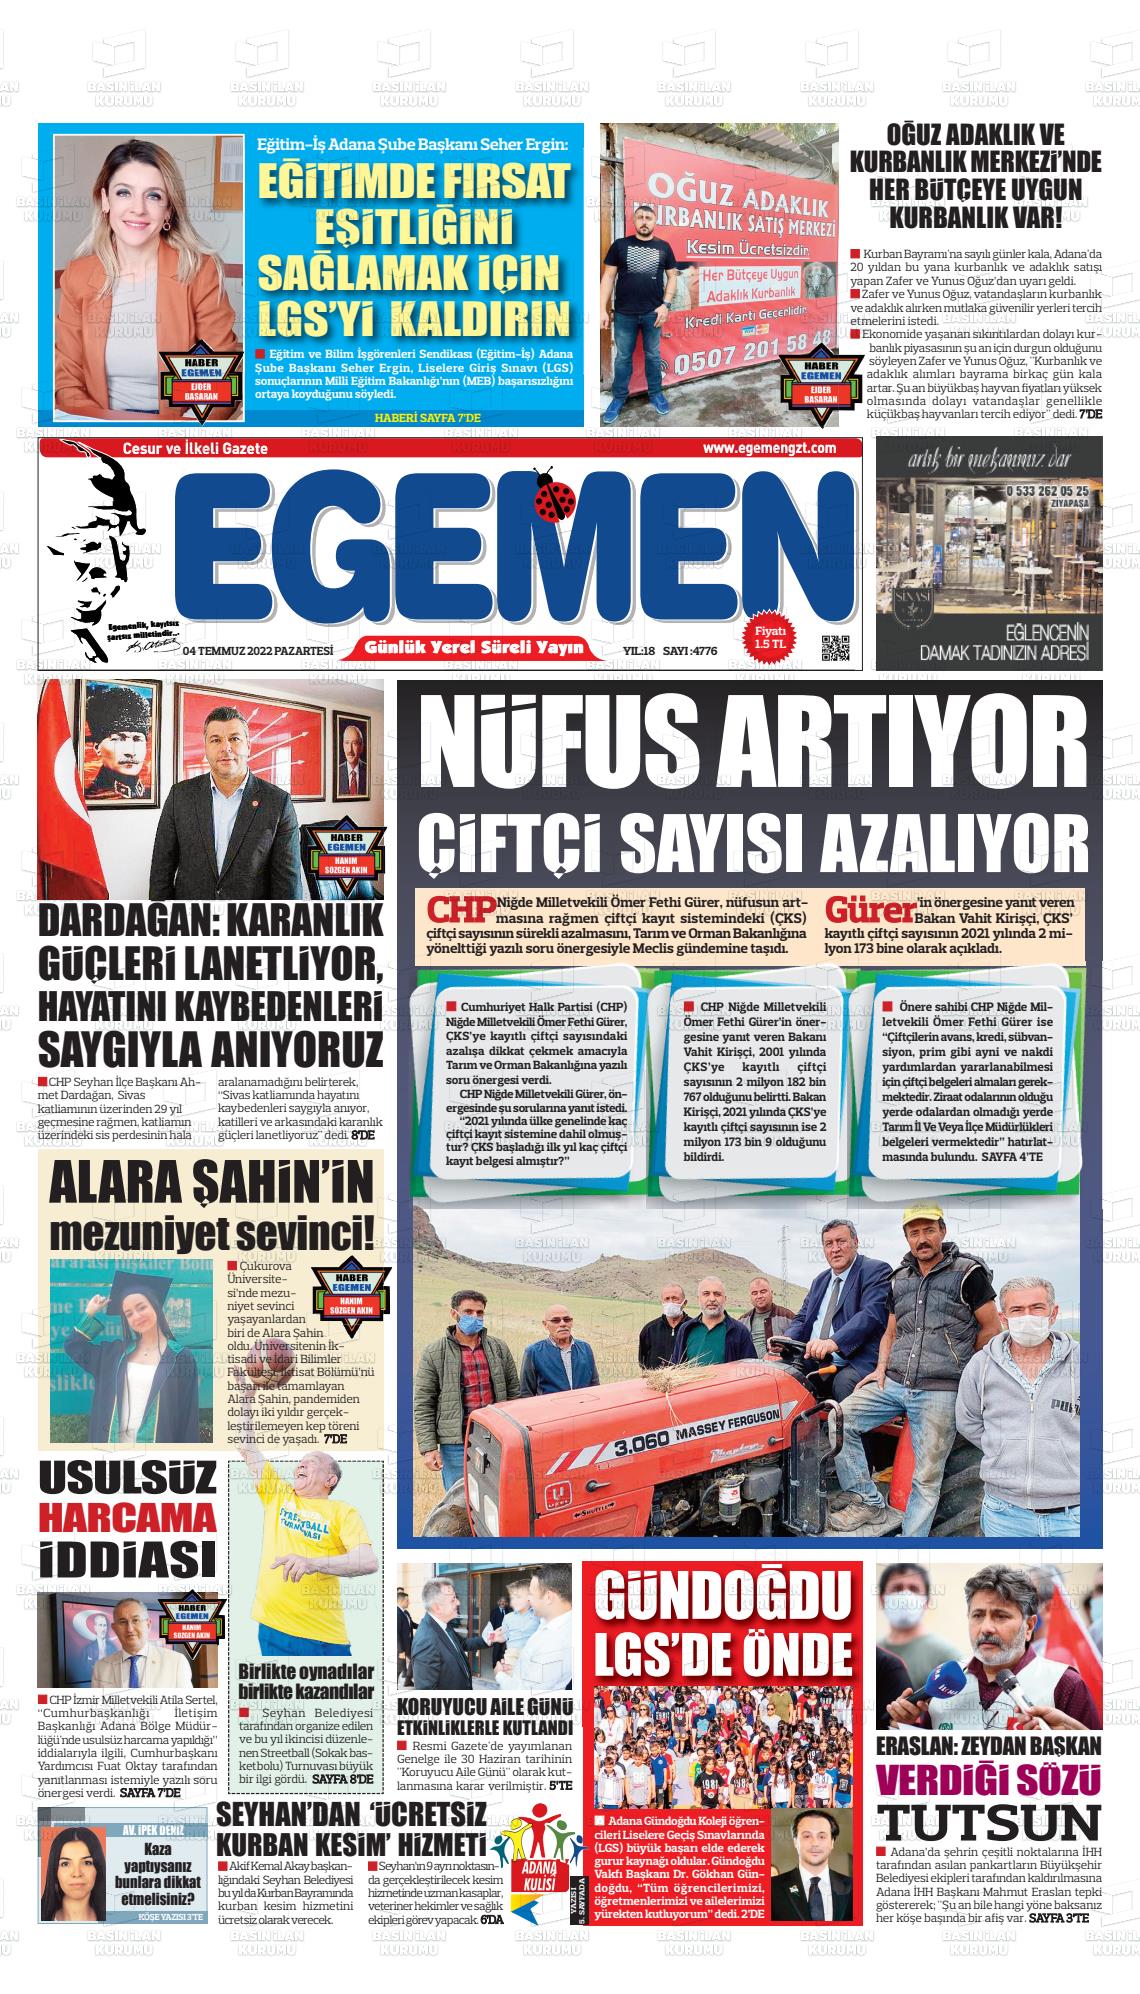 04 Temmuz 2022 Egemen  Adana Gazete Manşeti